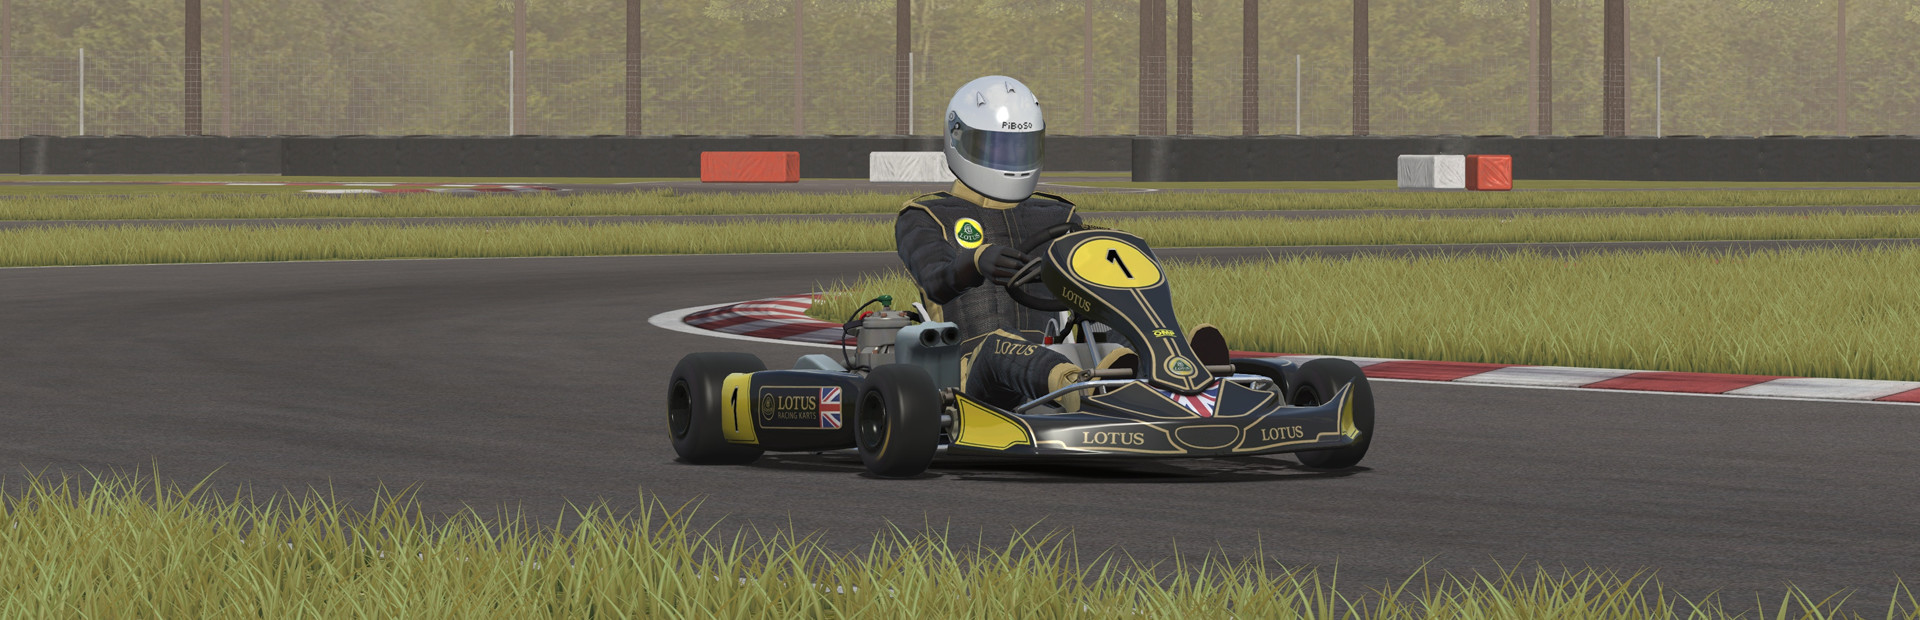 Kart Racing Pro cover image